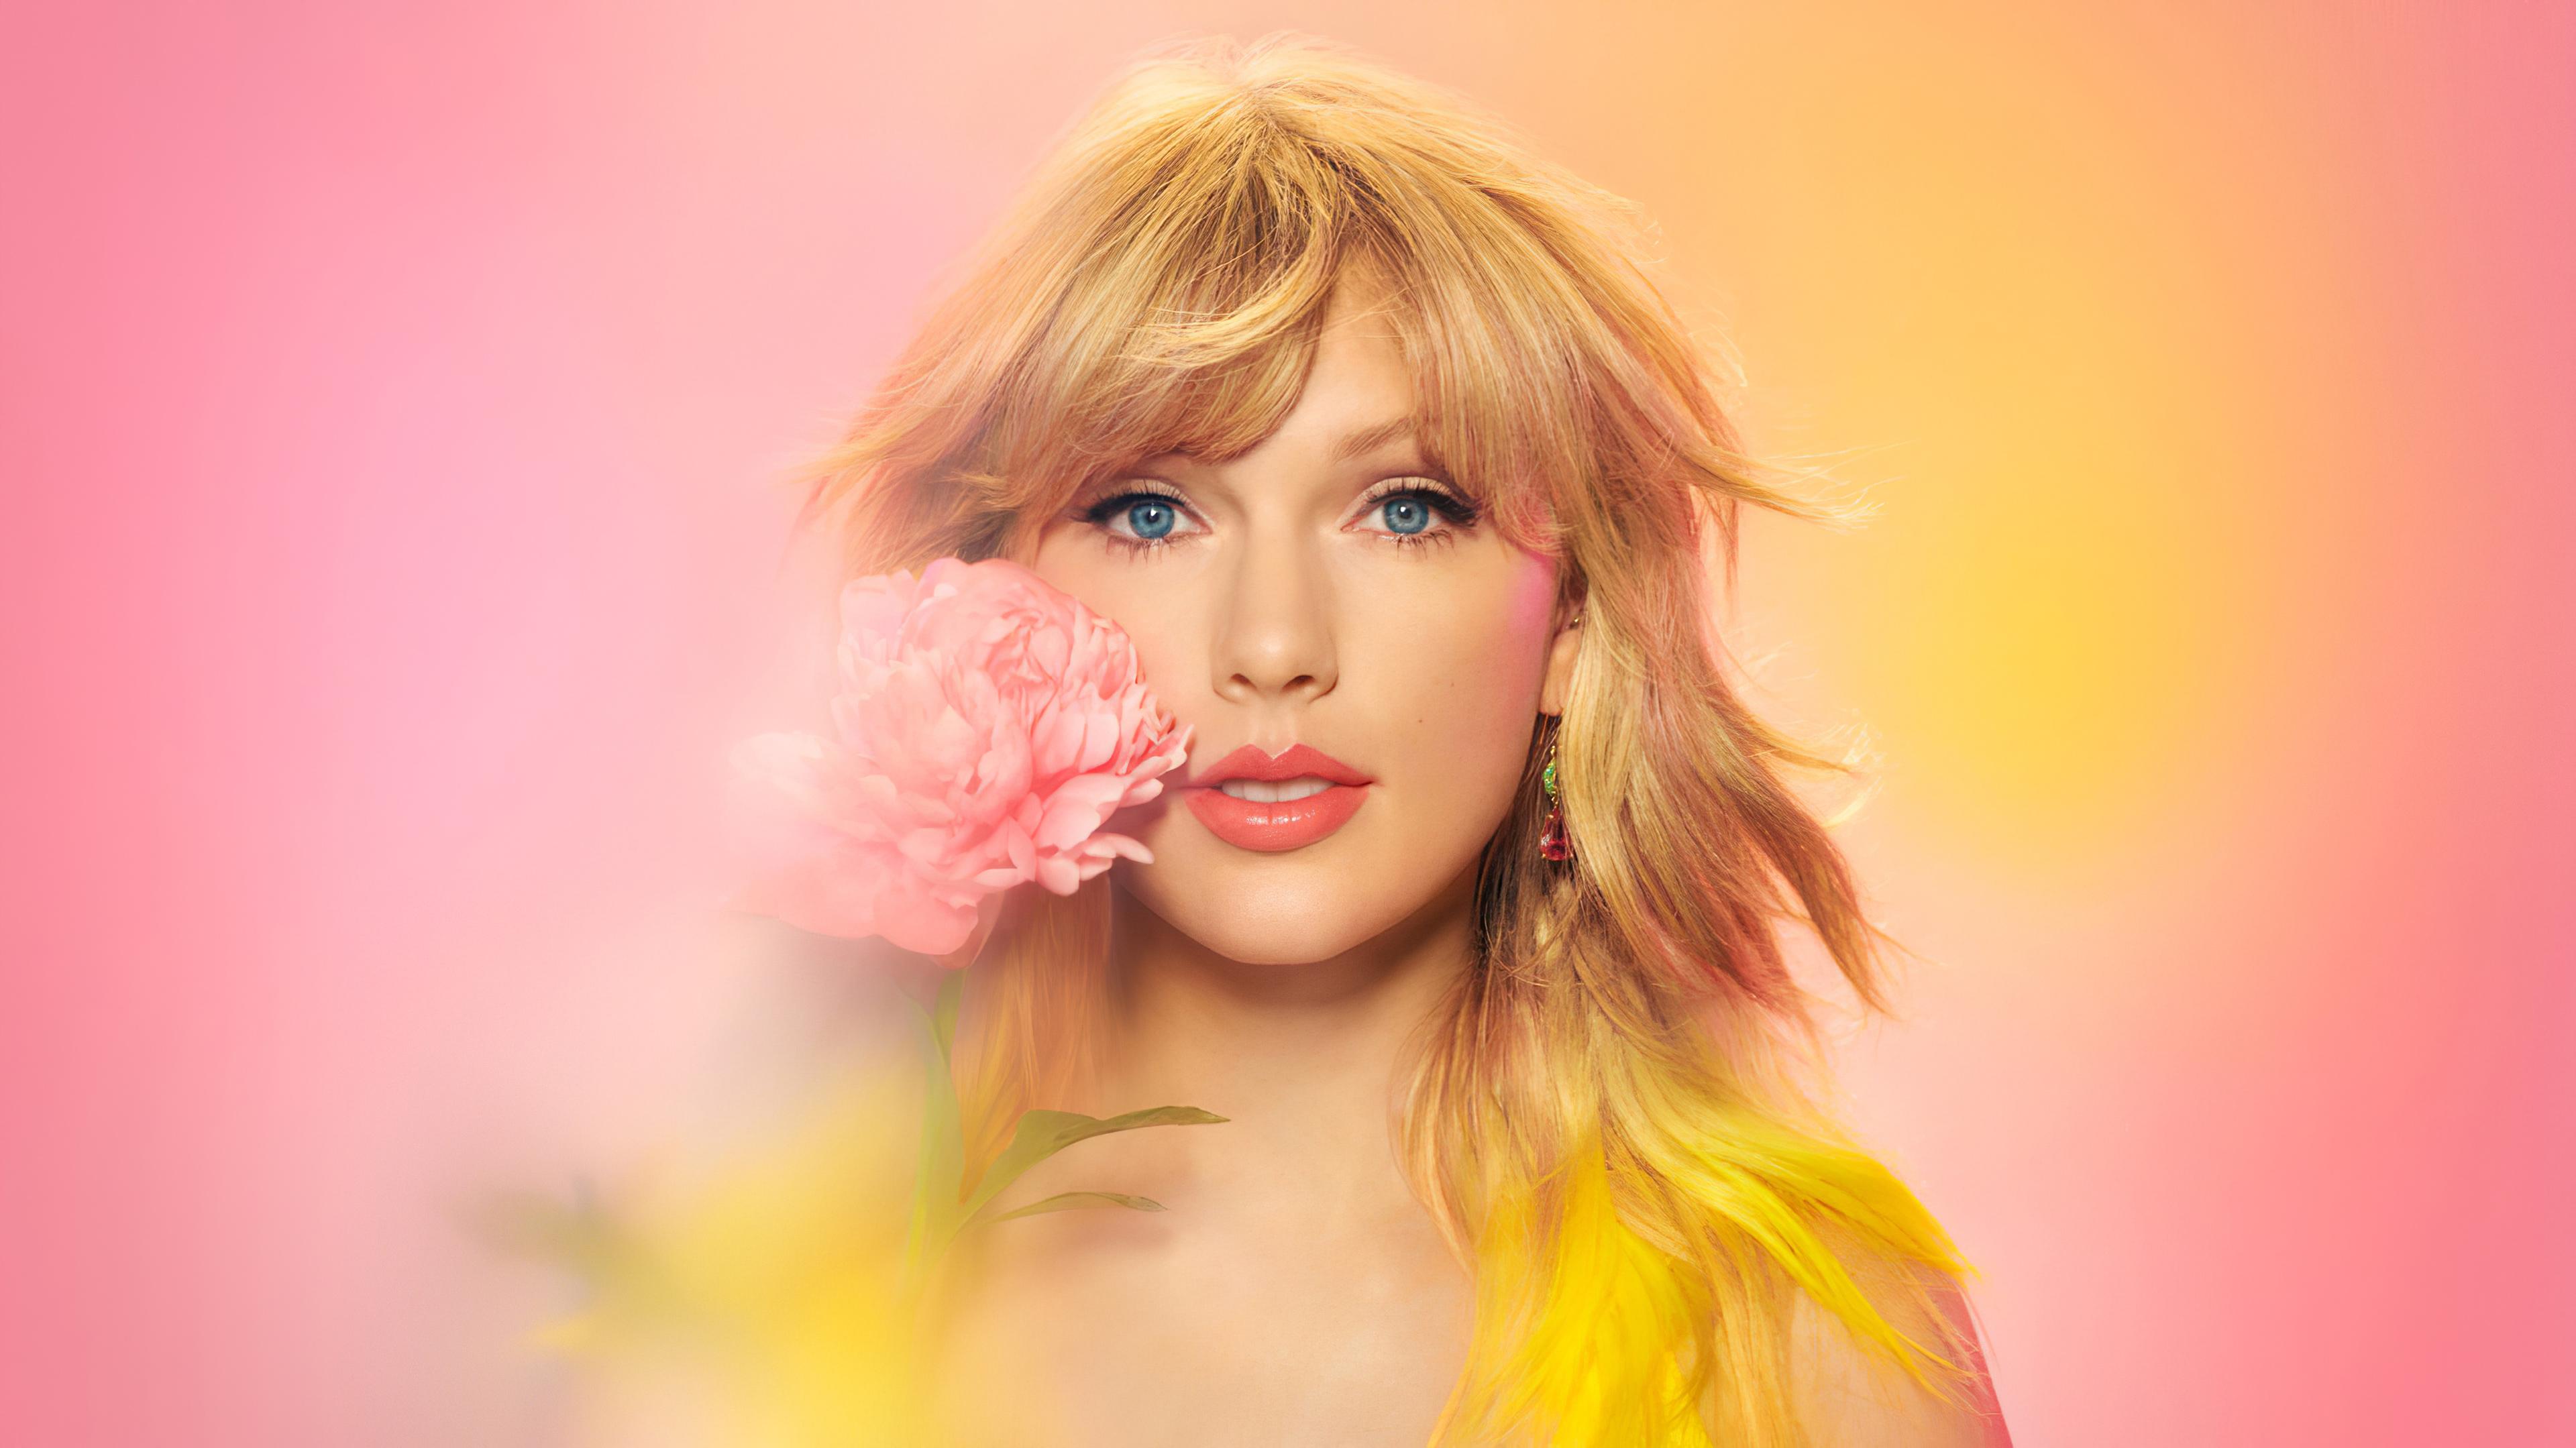 Taylor Swift Apple Music Photoshoot 4k HD